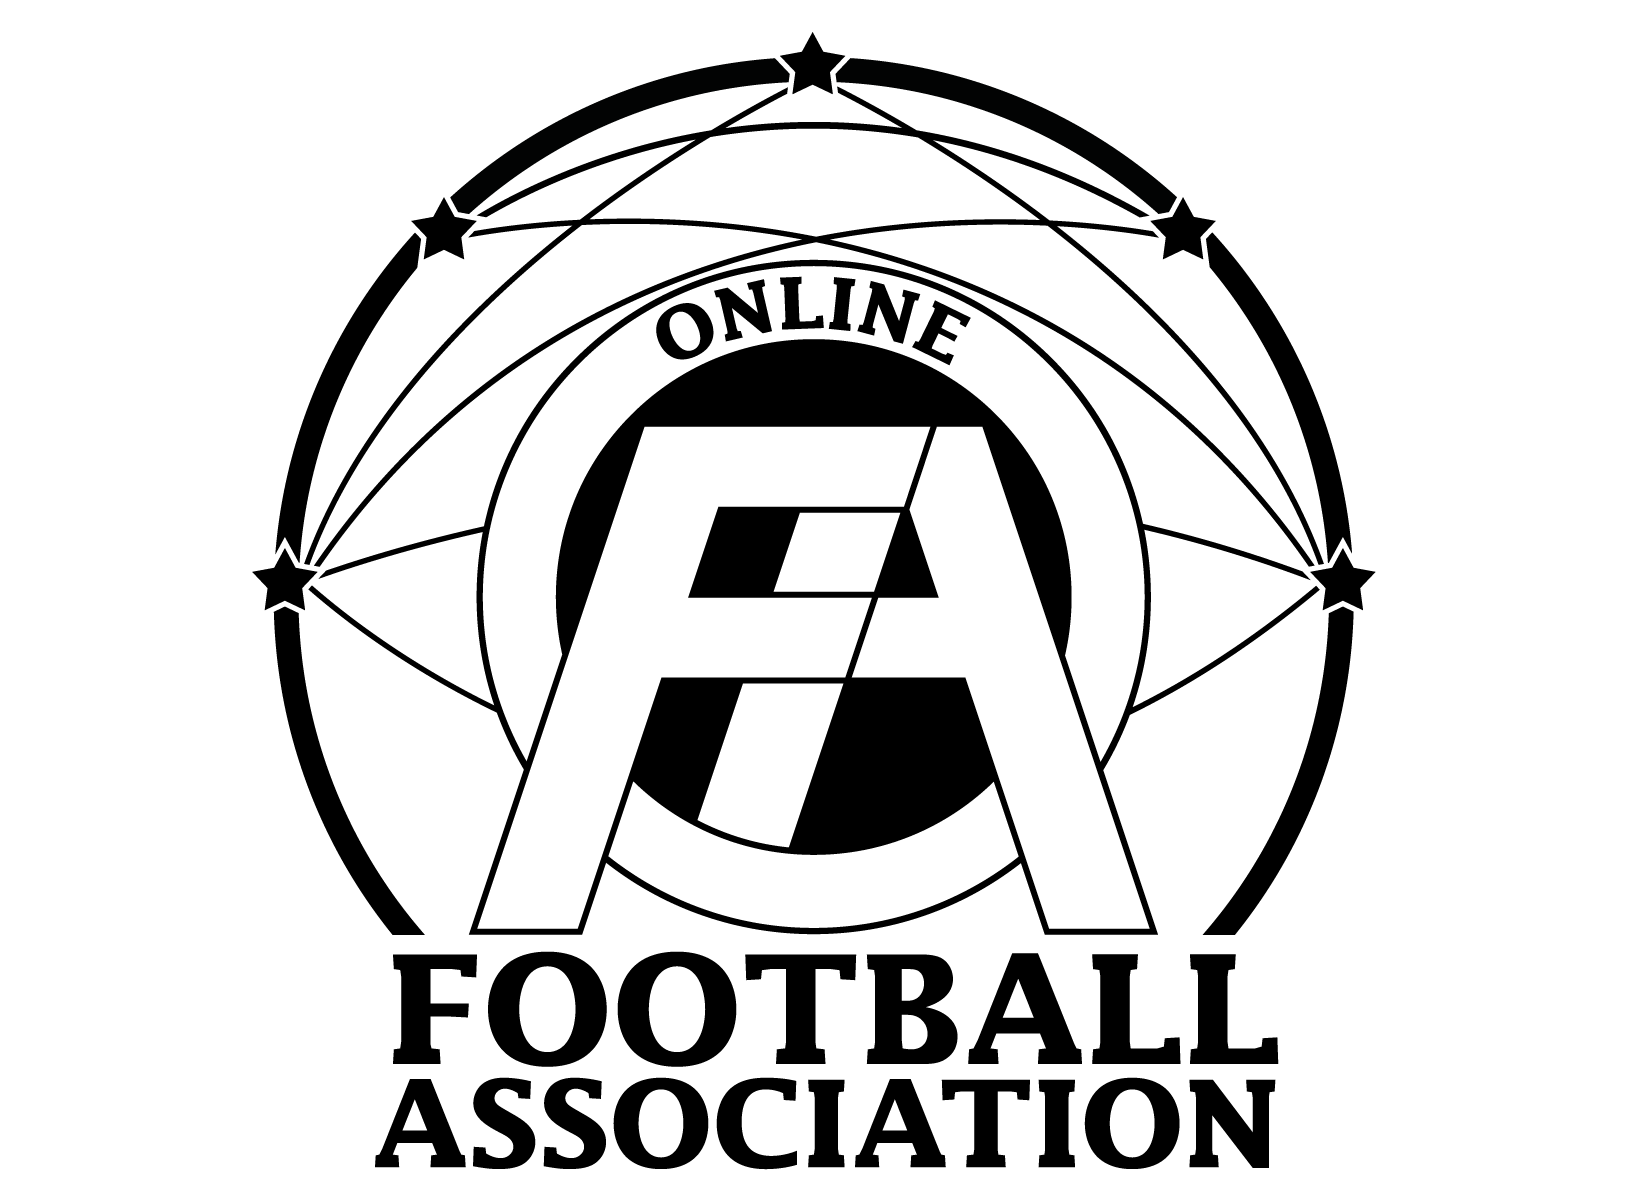 (c) Online-football-association.com